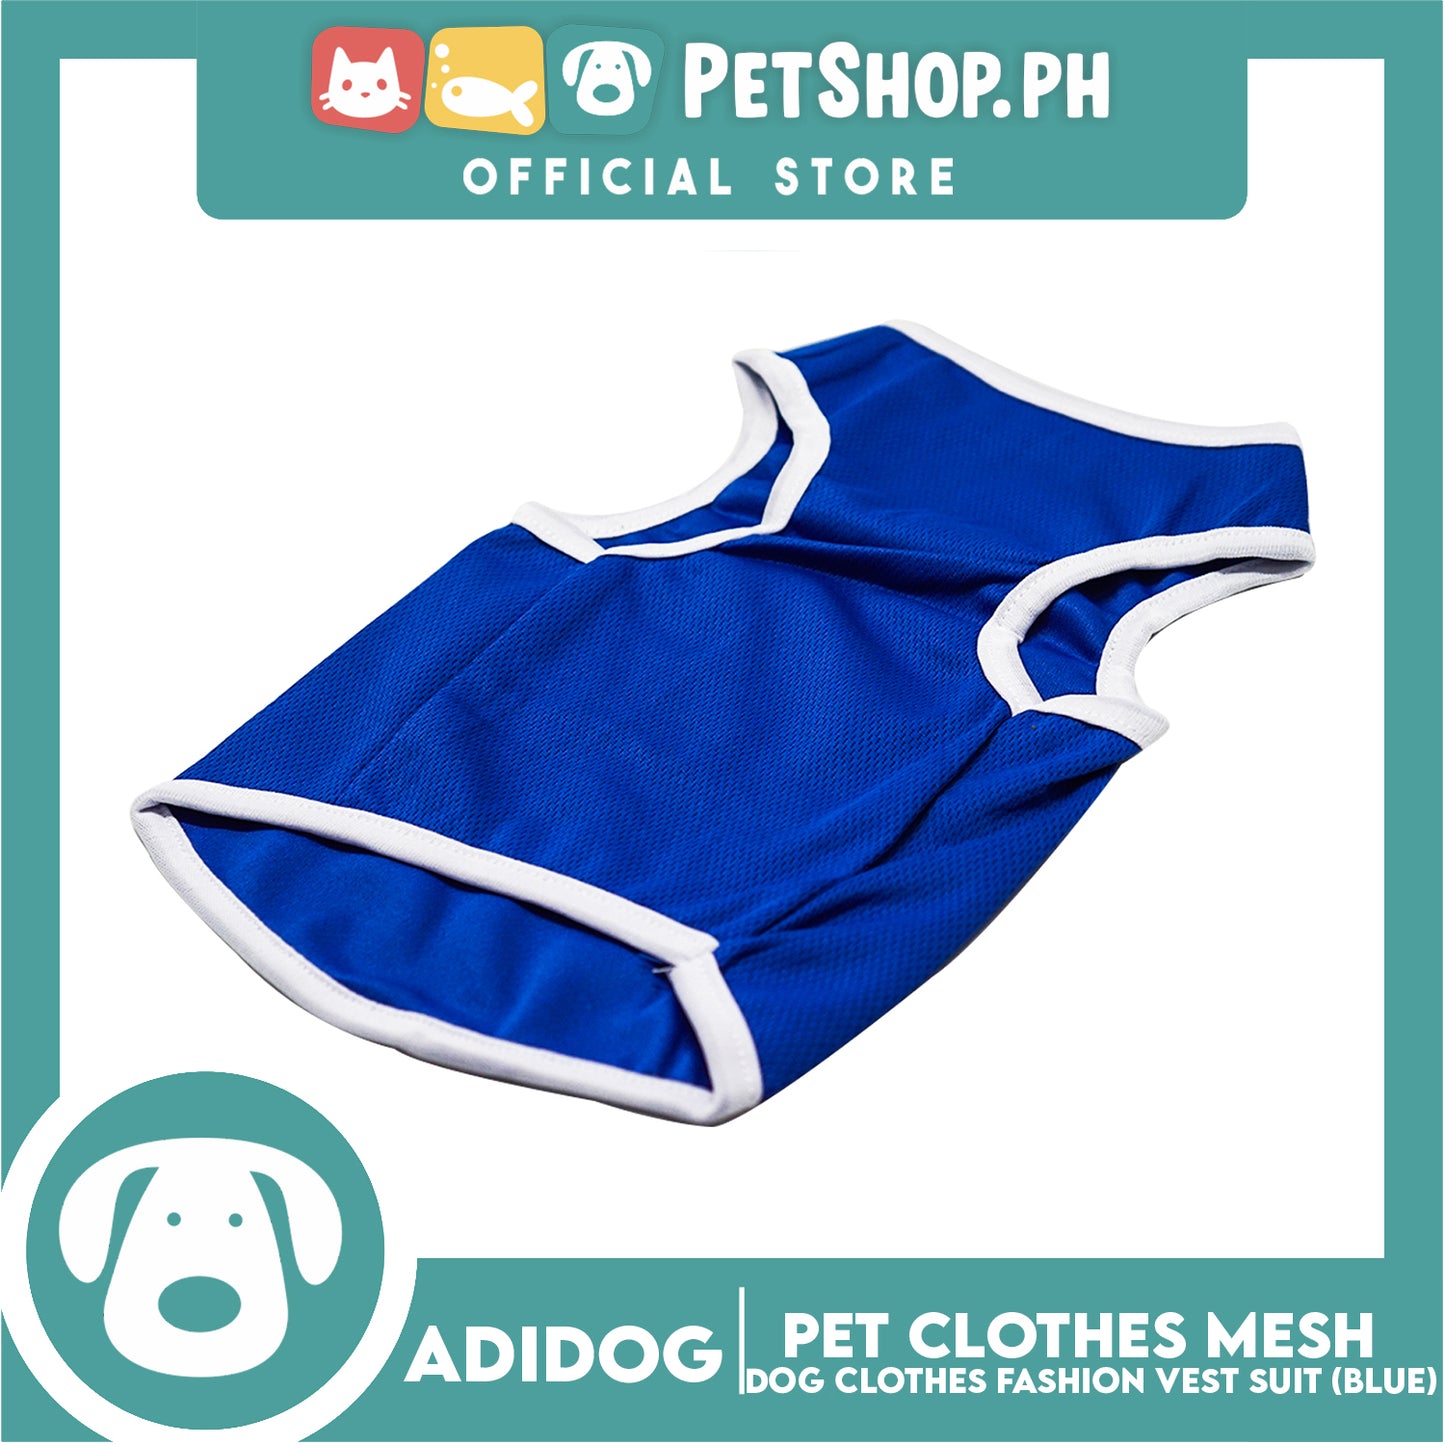 Adidog Pet Clothes Mesh Vet, Summer Dog Clothes, Breathable Mesh Vet, Dog Shirt, Pet Jersey, Fashion Vest Suit for Dogs (Blue) (Large)